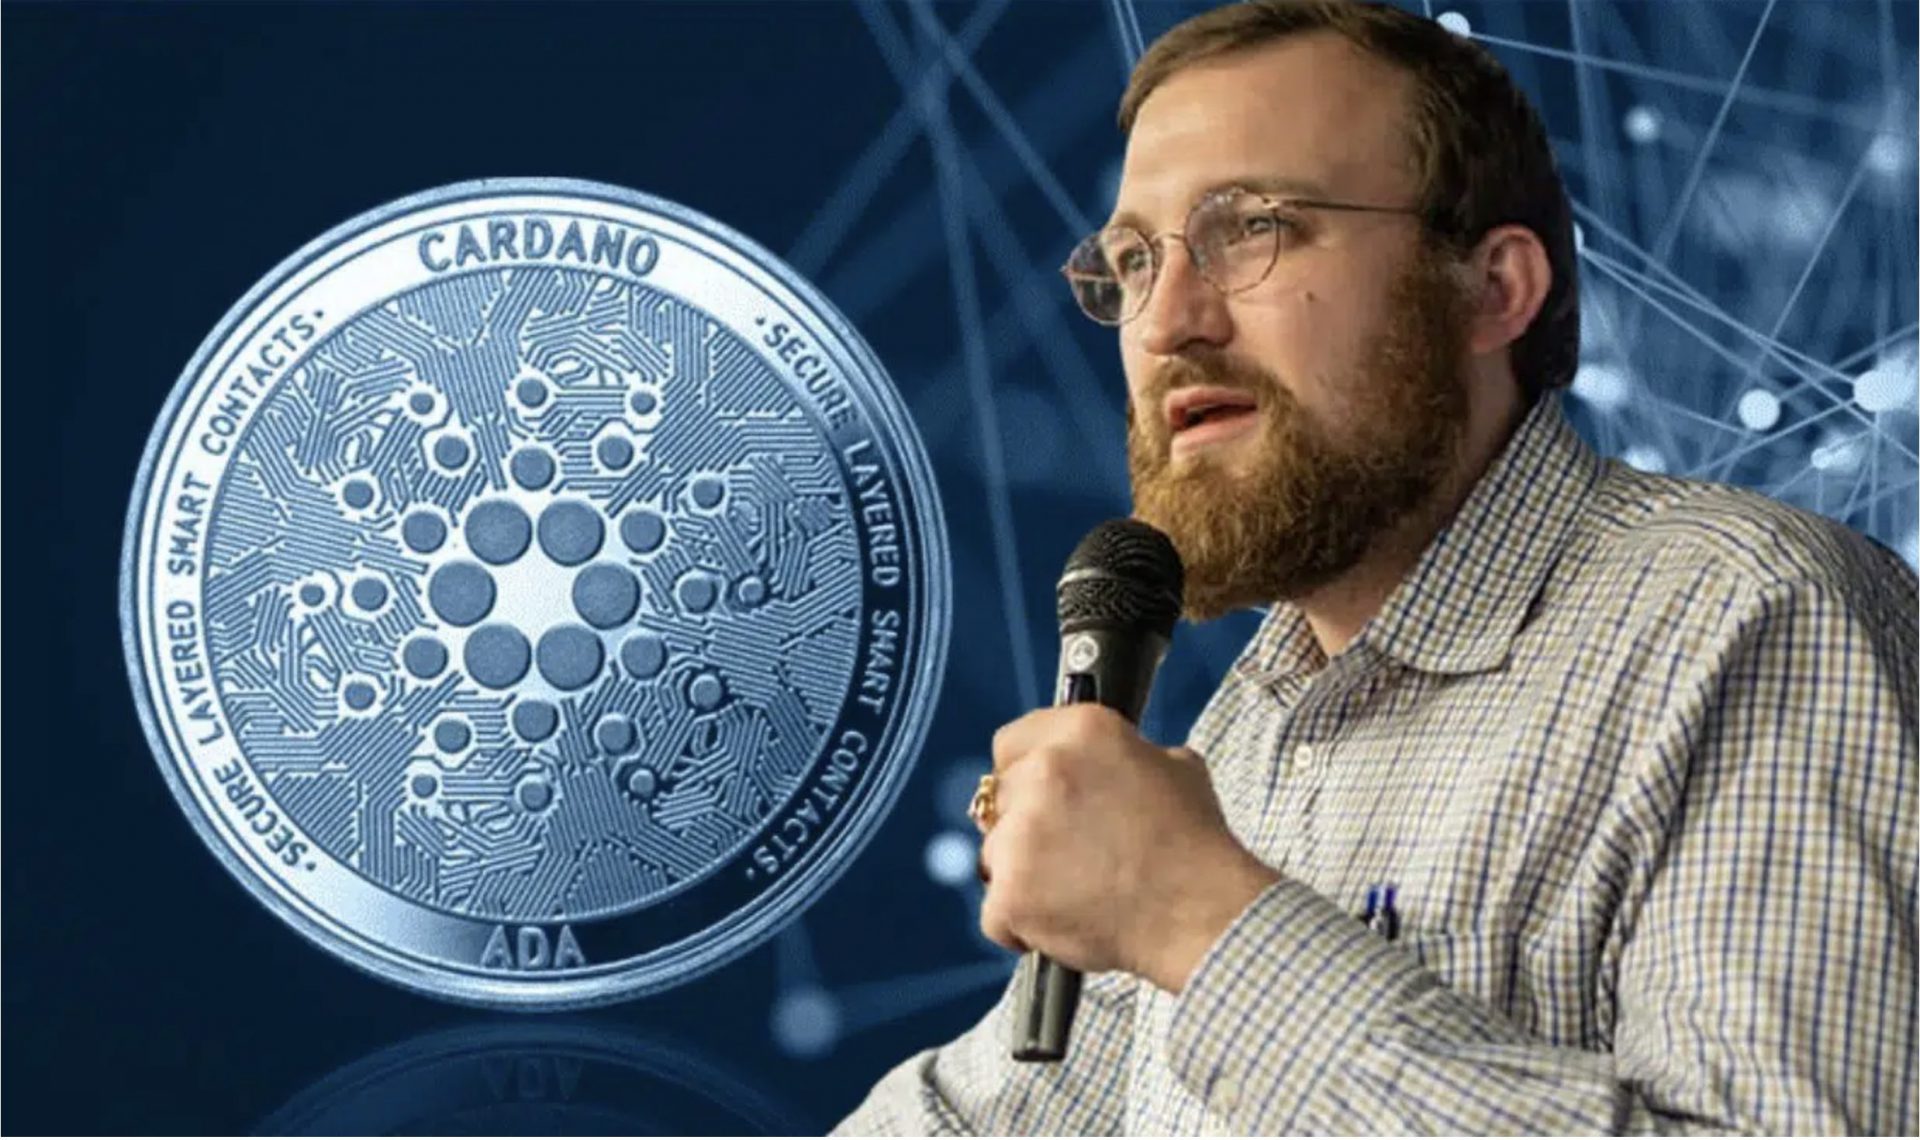 Cardano Founder Calls BlackRock's Bitcoin ETF Supporters "Greedy"